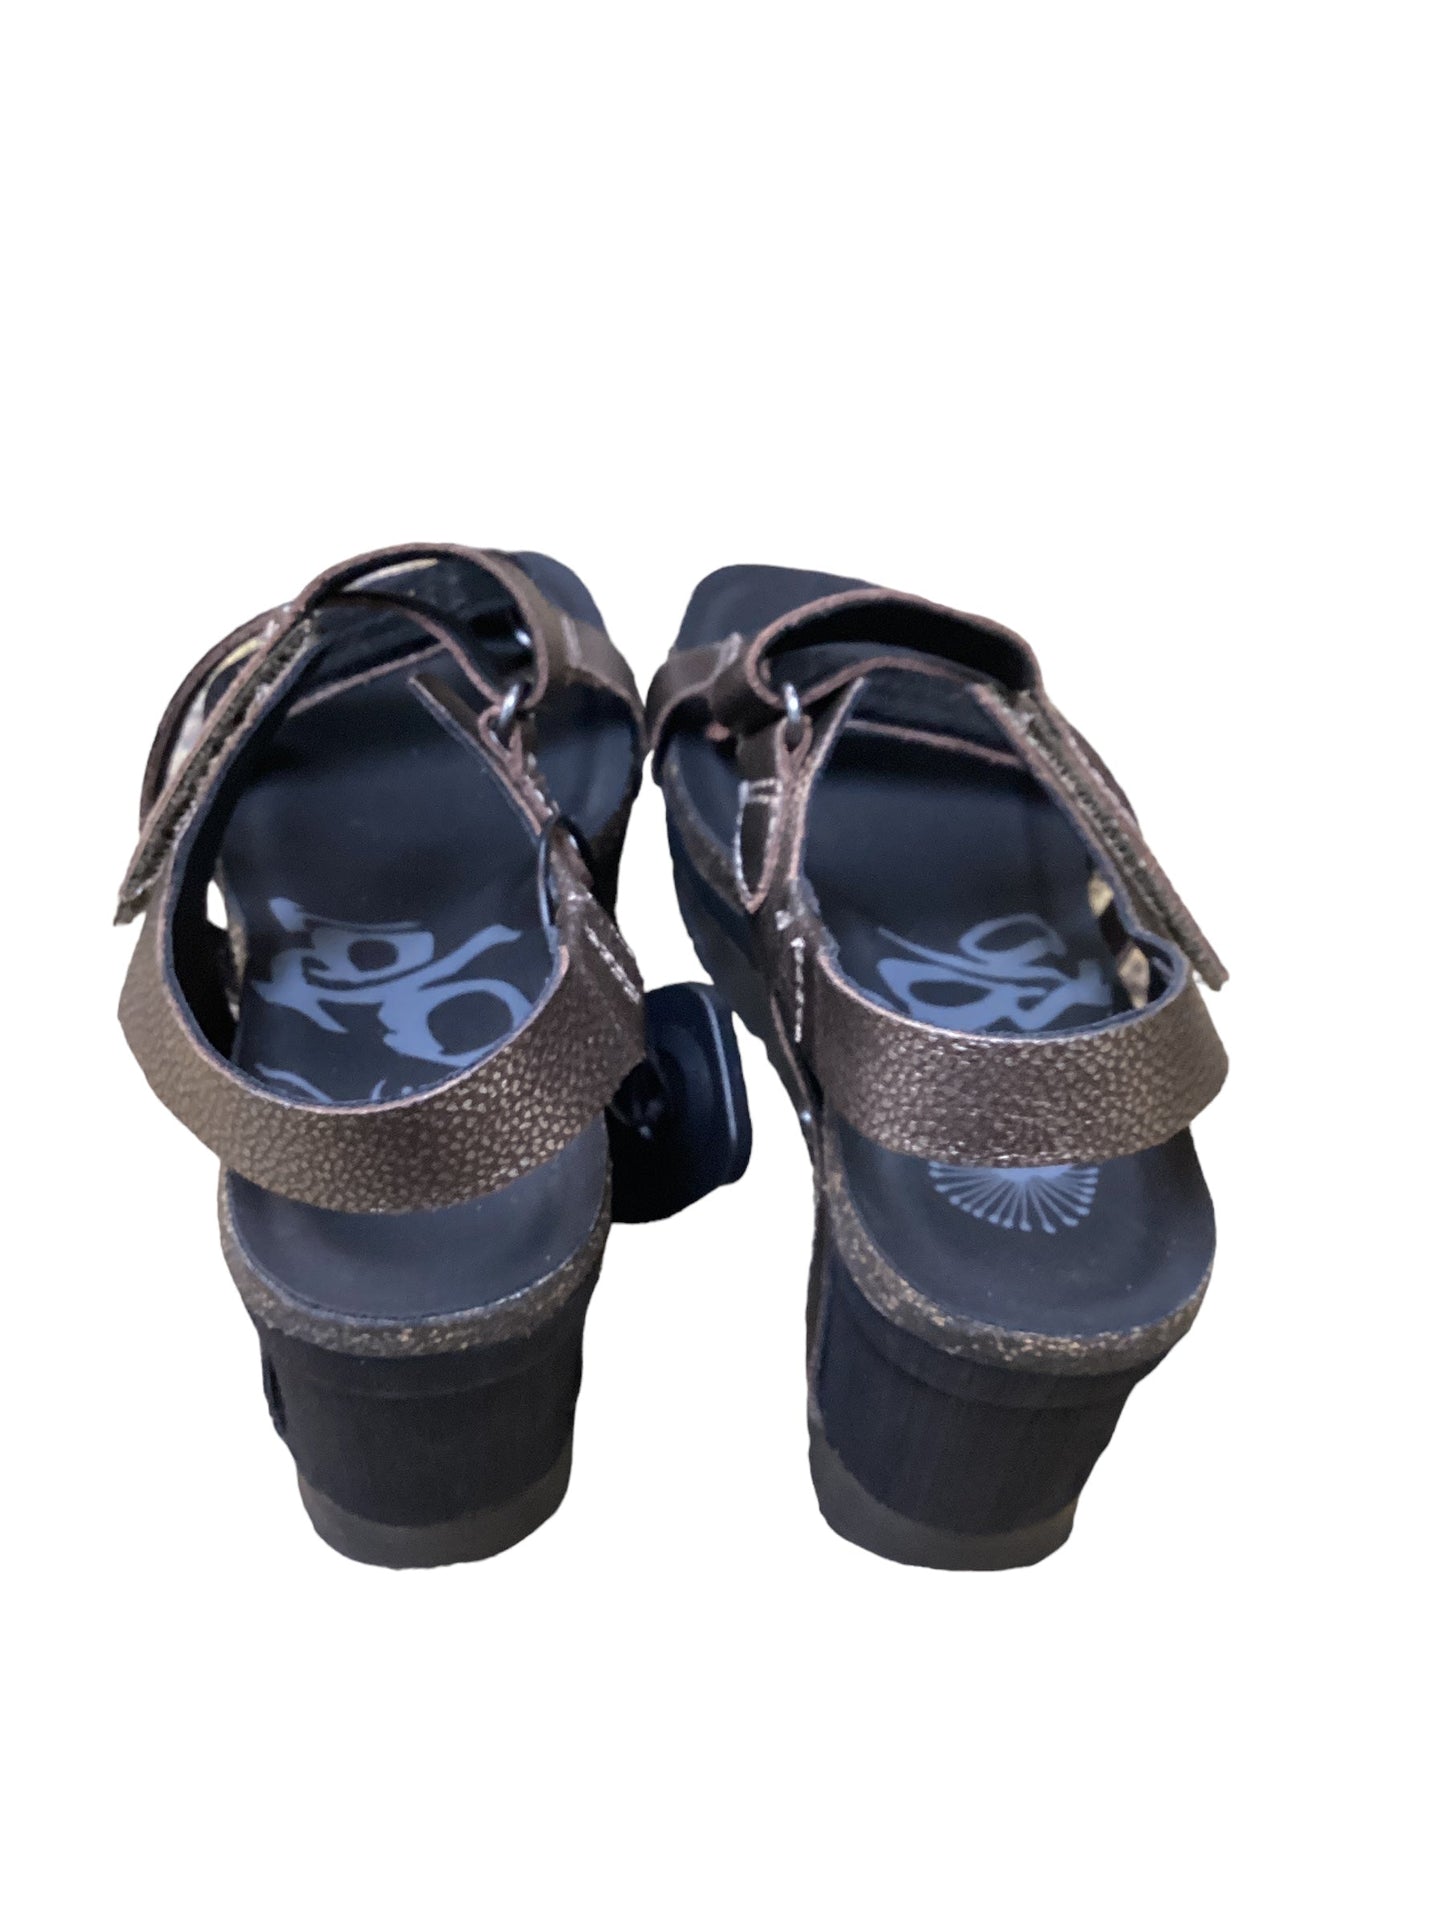 Black & Brown Sandals Heels Wedge Otbt, Size 6.5